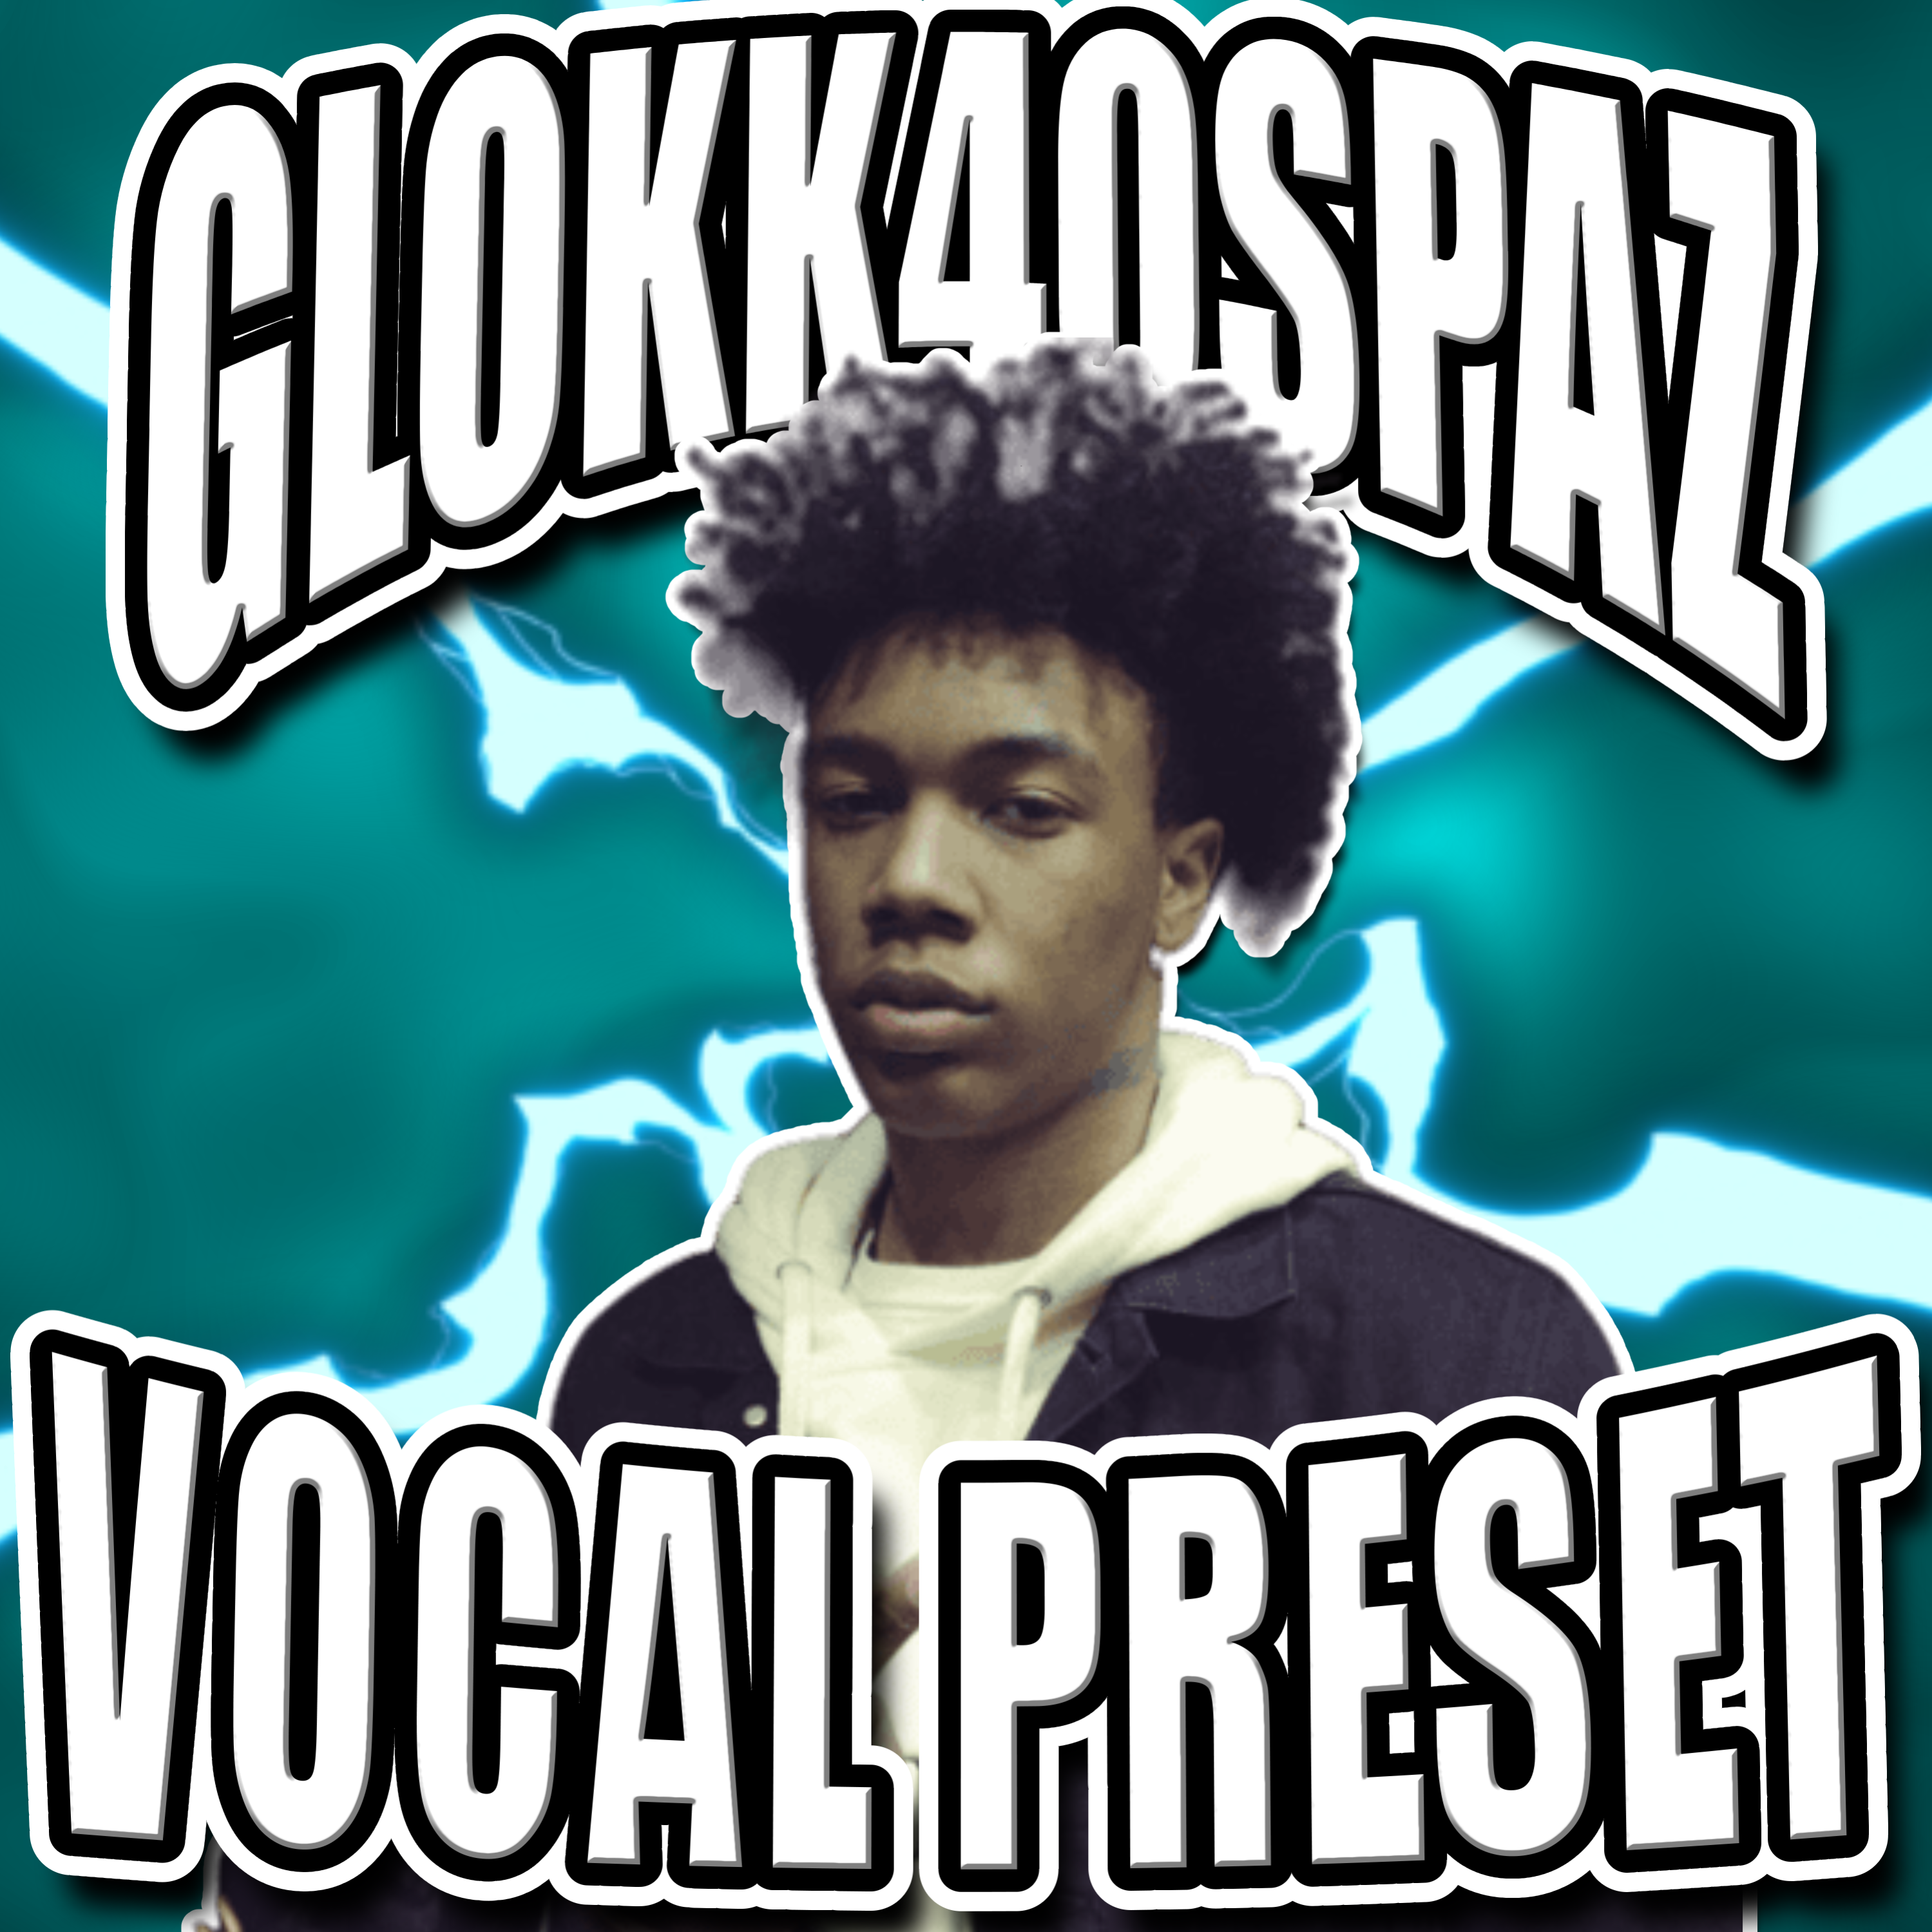 The Glokk40Spaz Vocal Preset